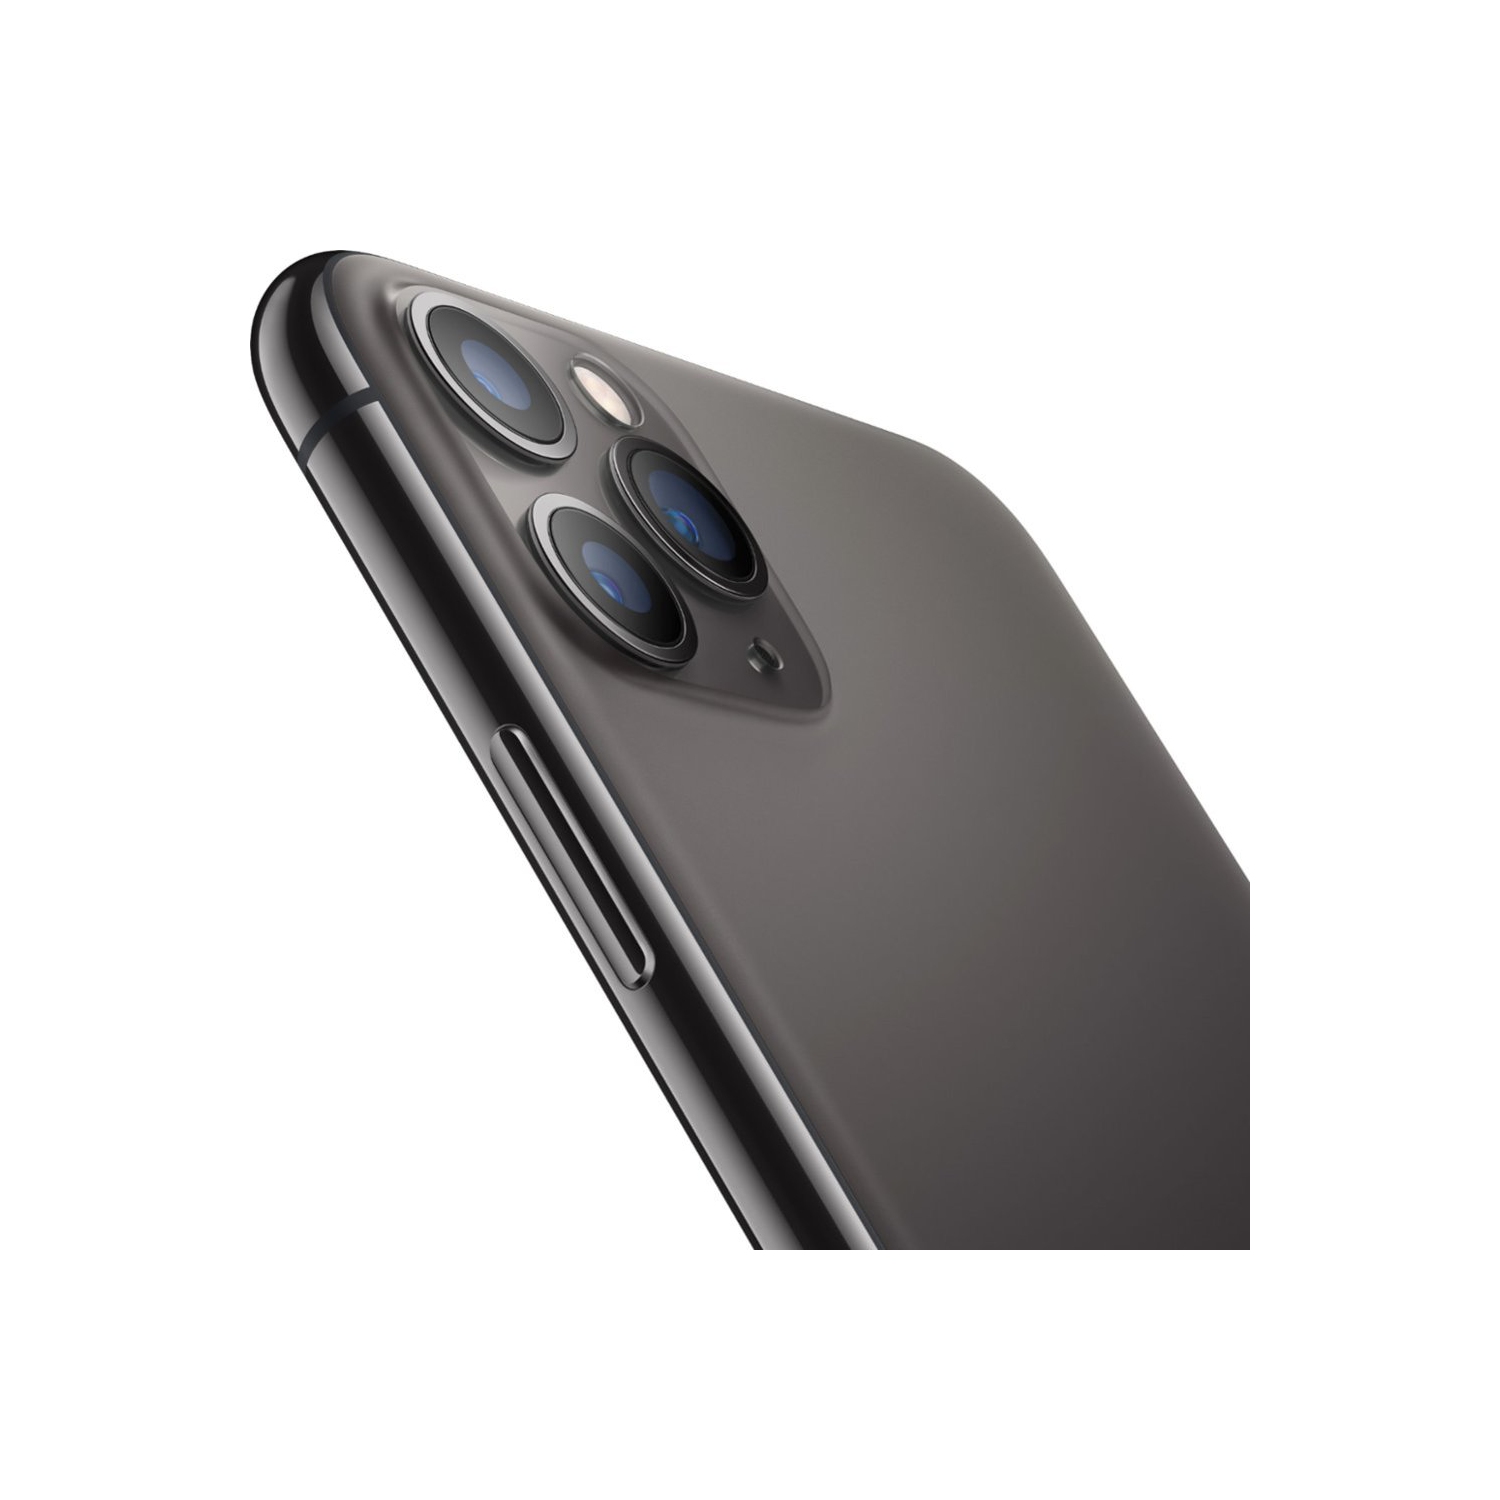 Apple iPhone 11 Pro 64GB Smartphone - Space Gray - Unlocked - Open